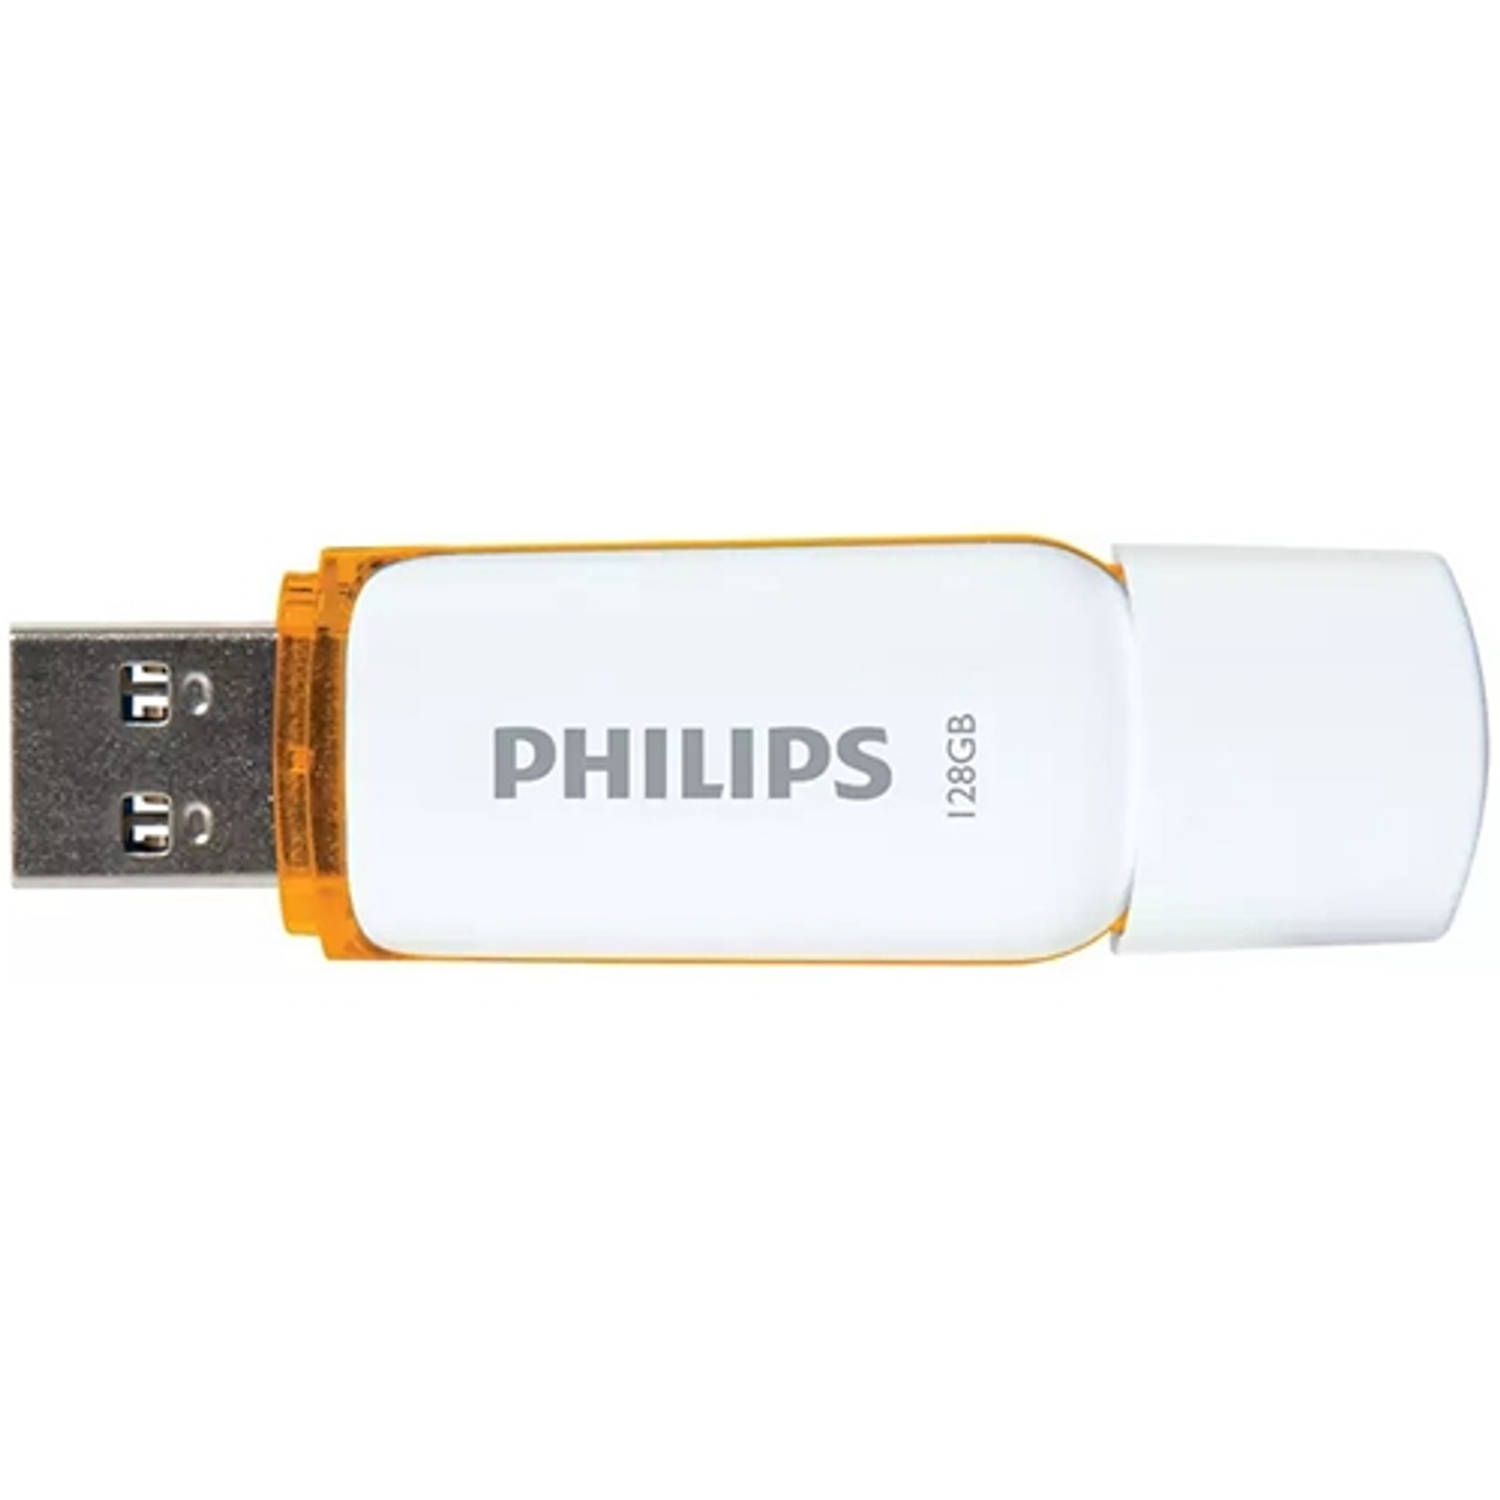 PHILIPS USB 2.0 Vivid 128 GB Oranje